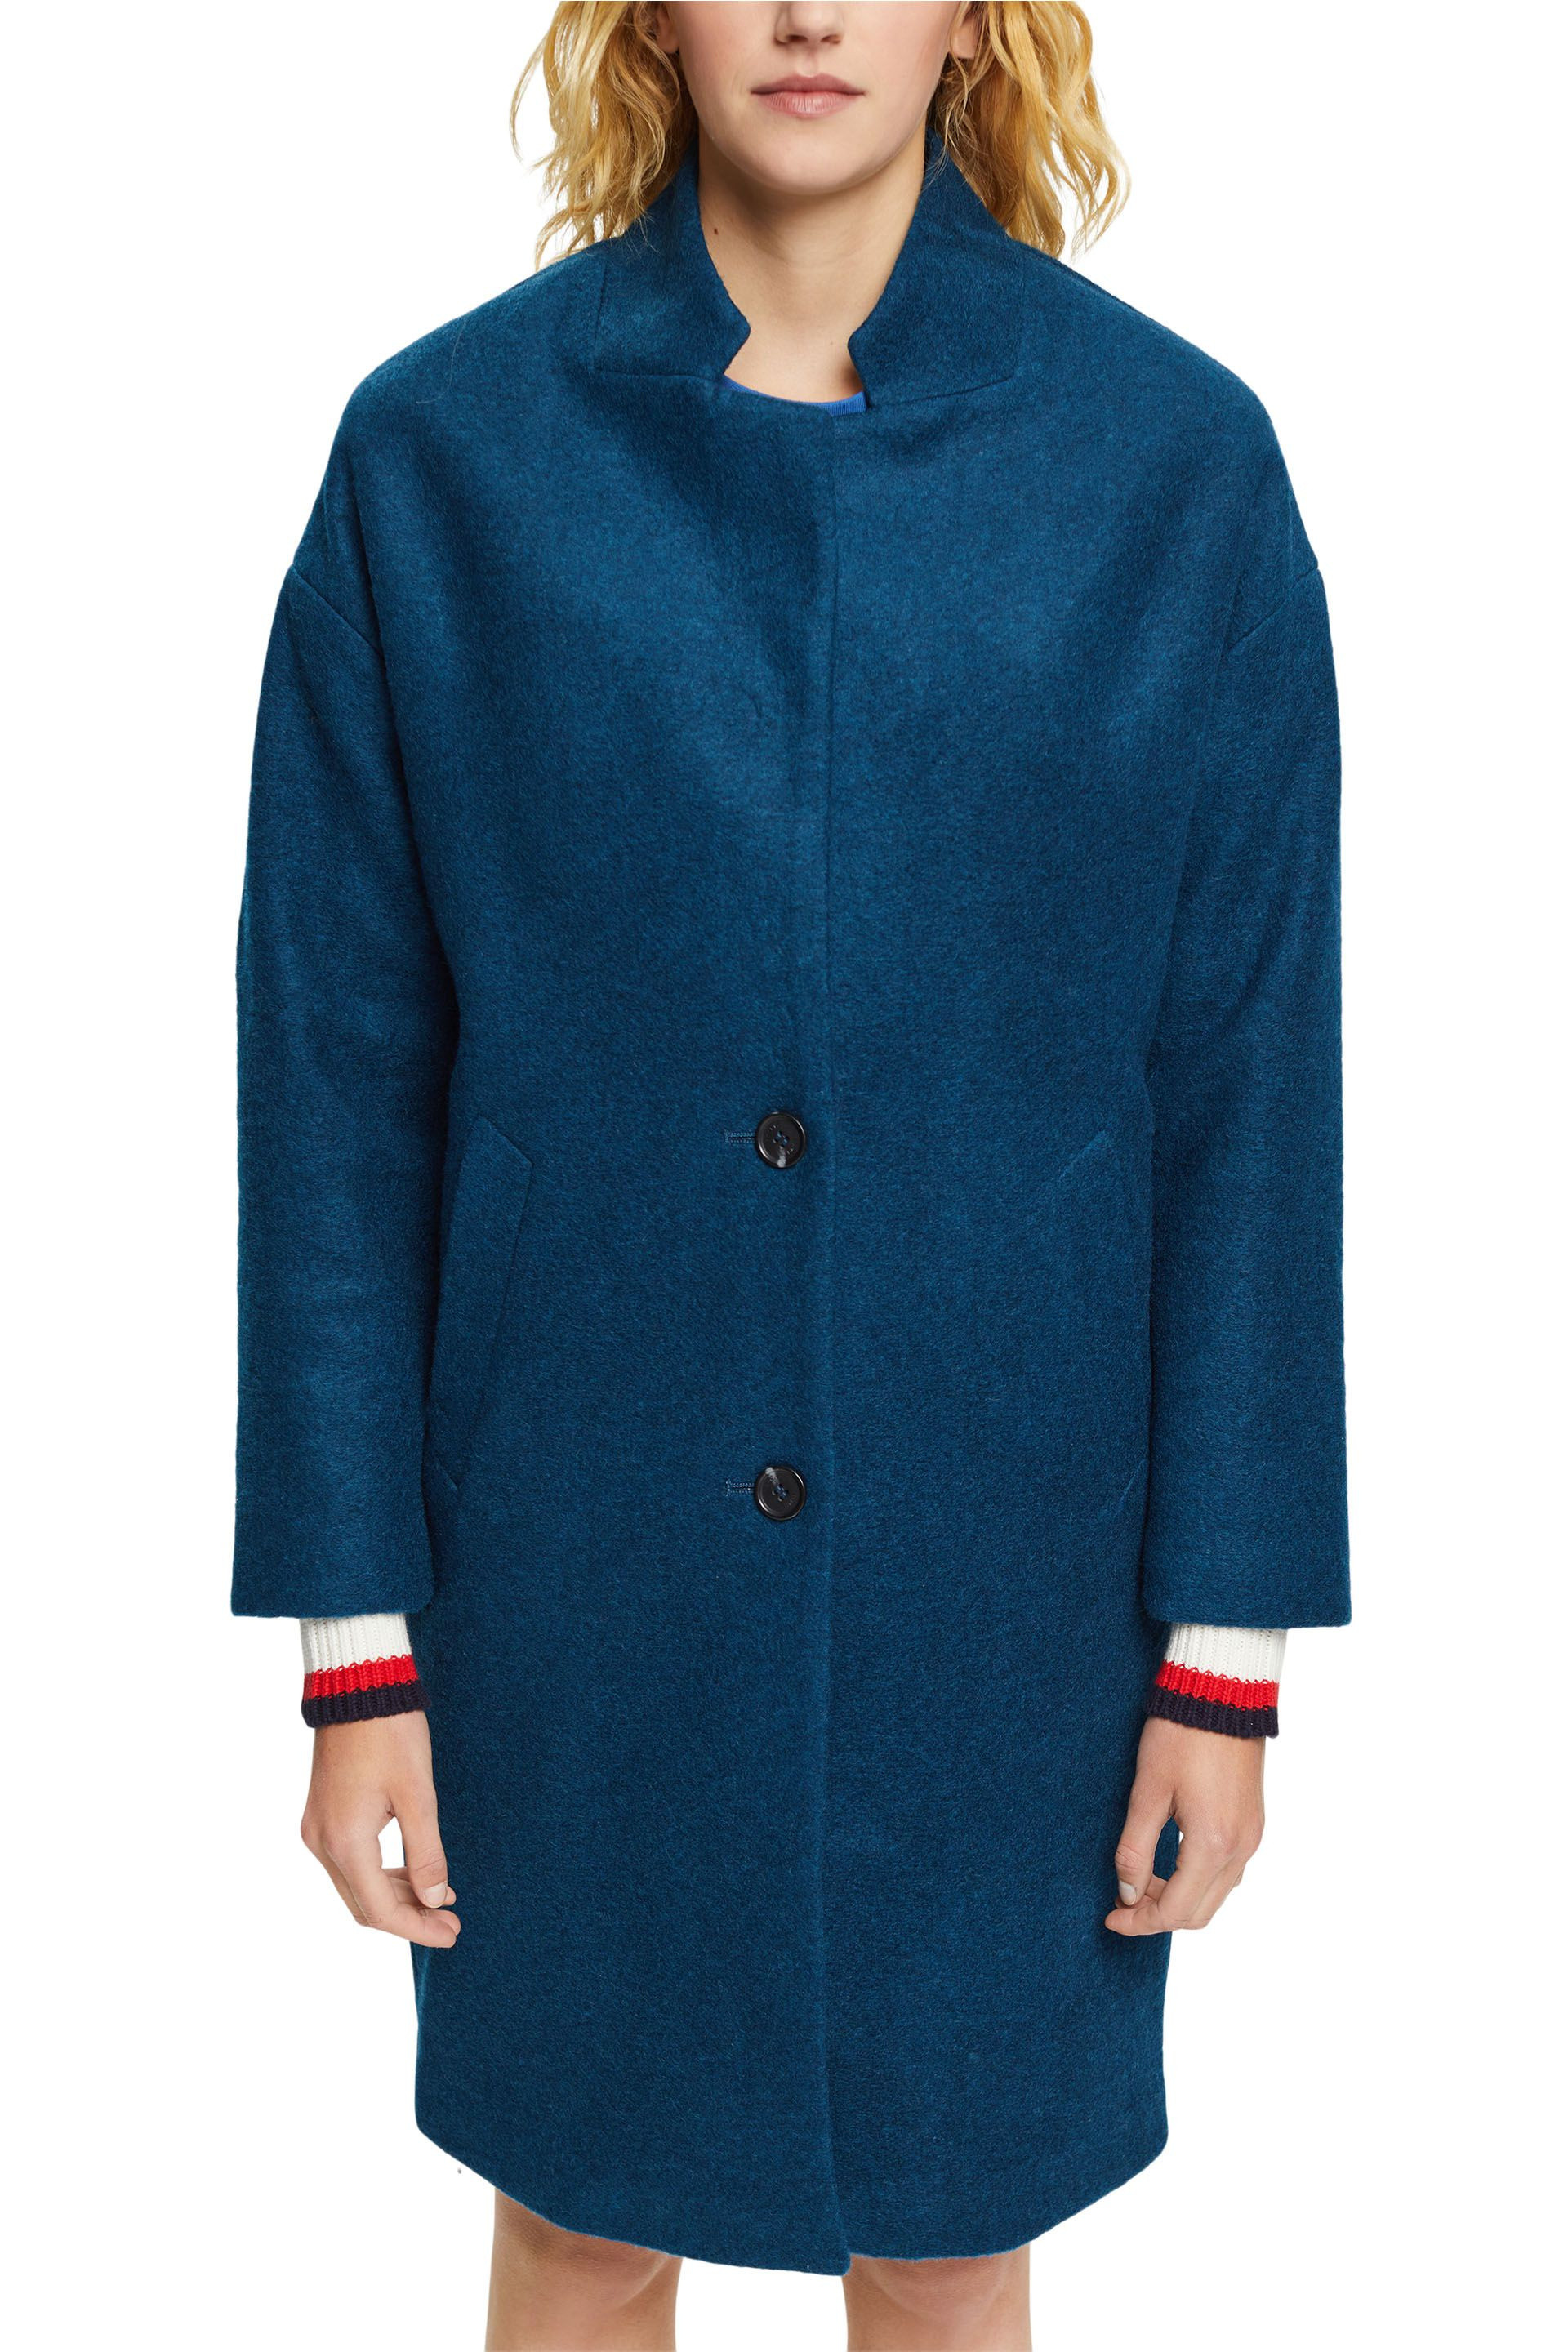 Cappotto in misto lana con collo revers, Blu, large image number 2